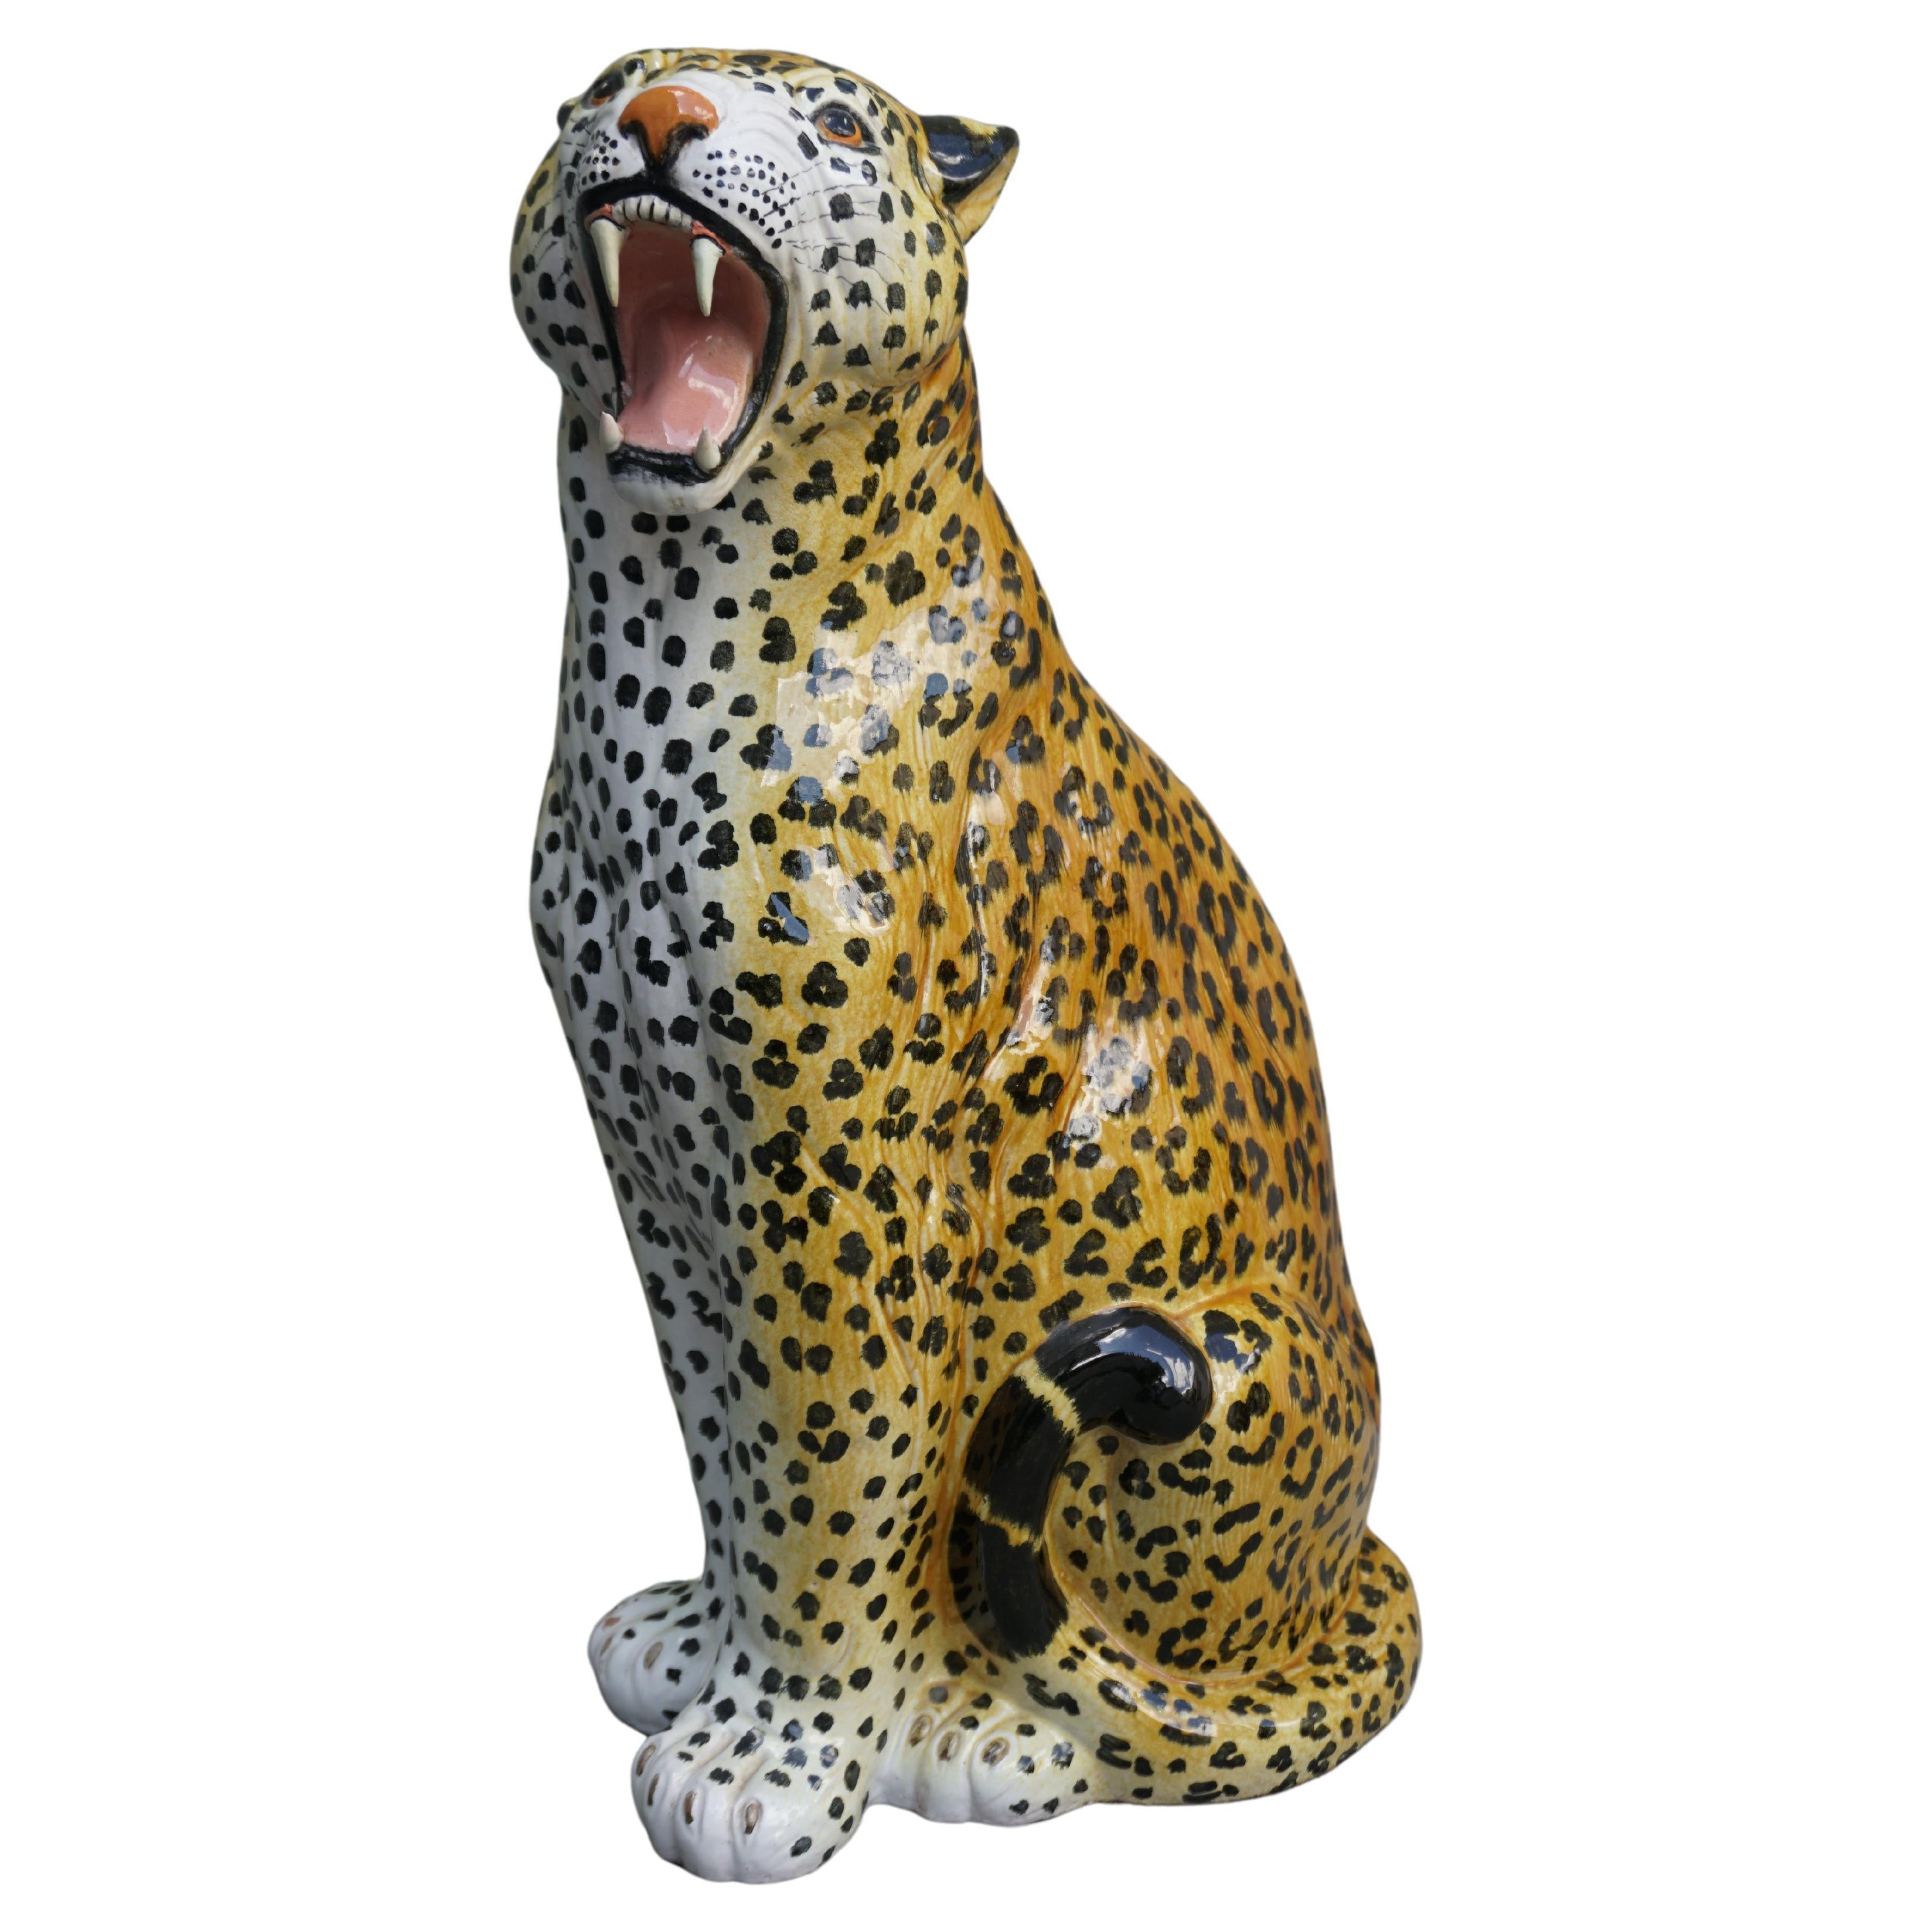 Vintage Ceramic Cheetah Statue - 2 For Sale on 1stDibs  large ceramic  cheetah, vintage cheetah statue, vintage cheetah